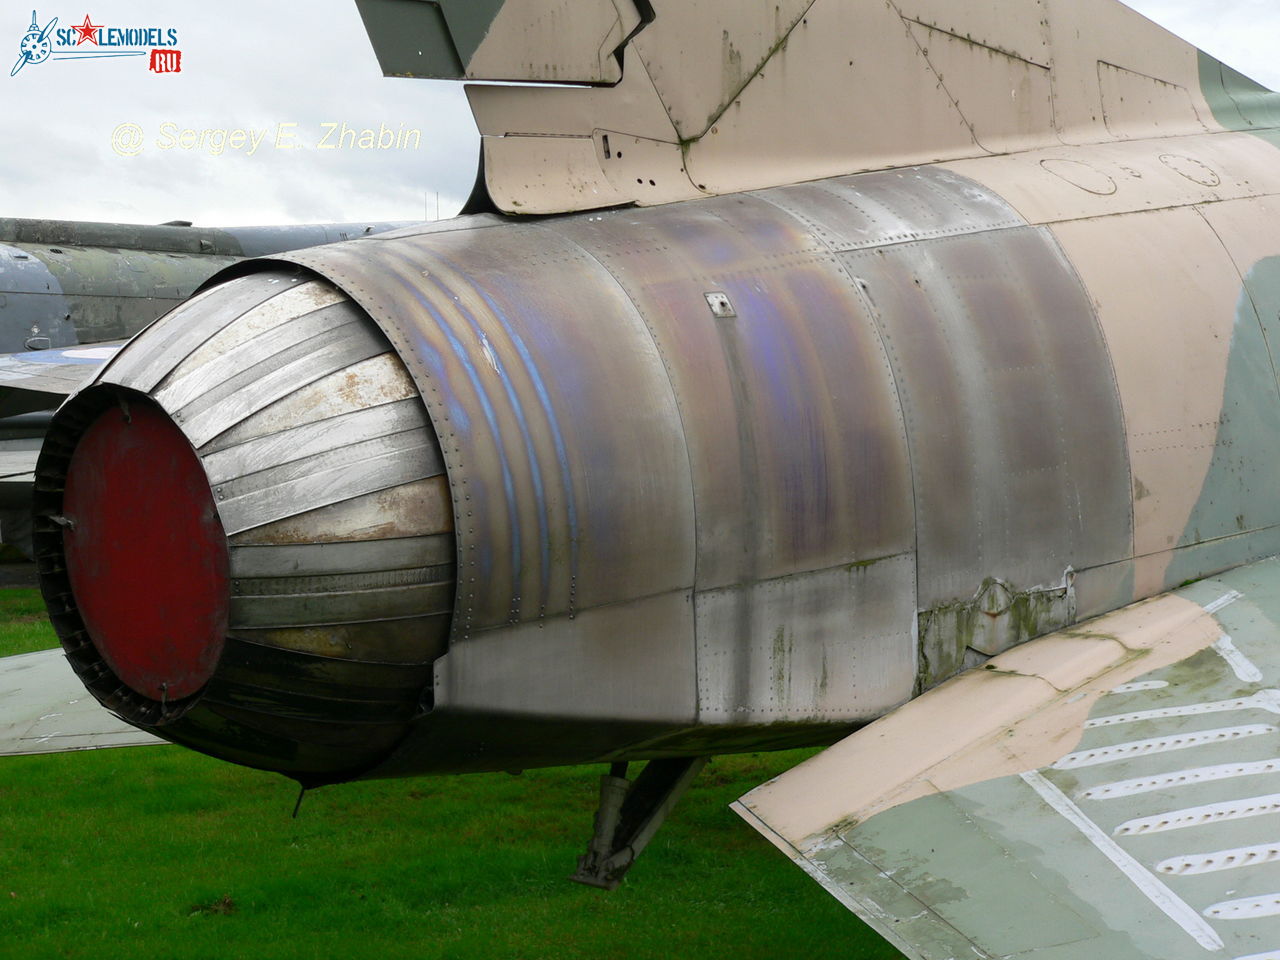 F-100D Newark RAF Museum (20).JPG